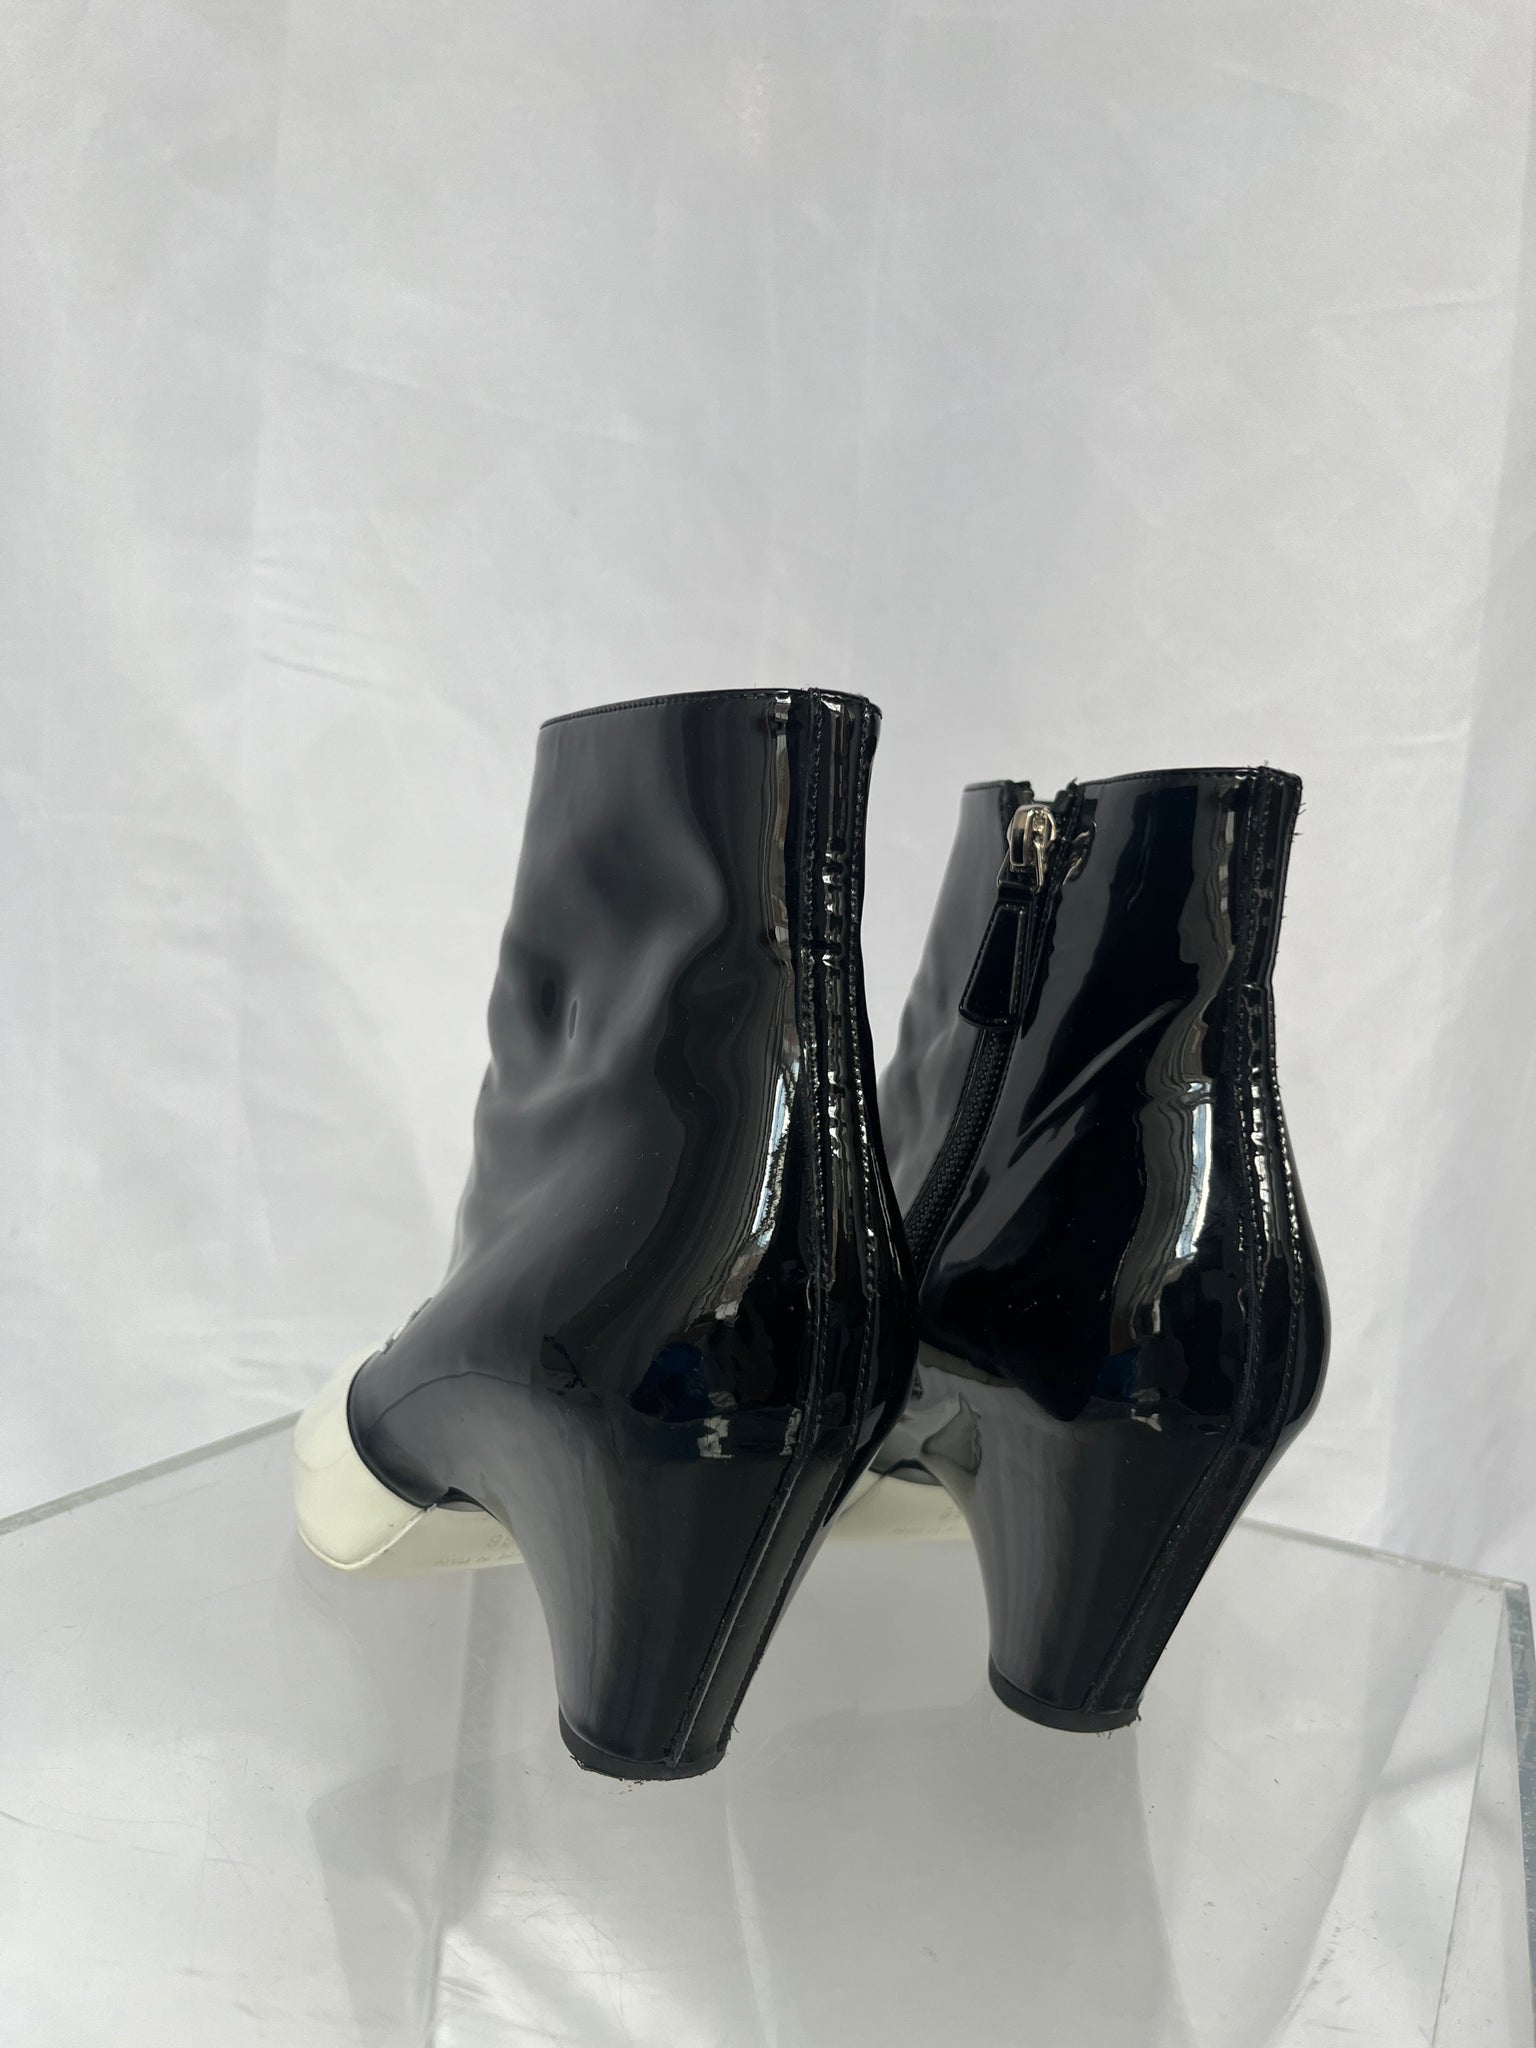 Chanel black/white boot